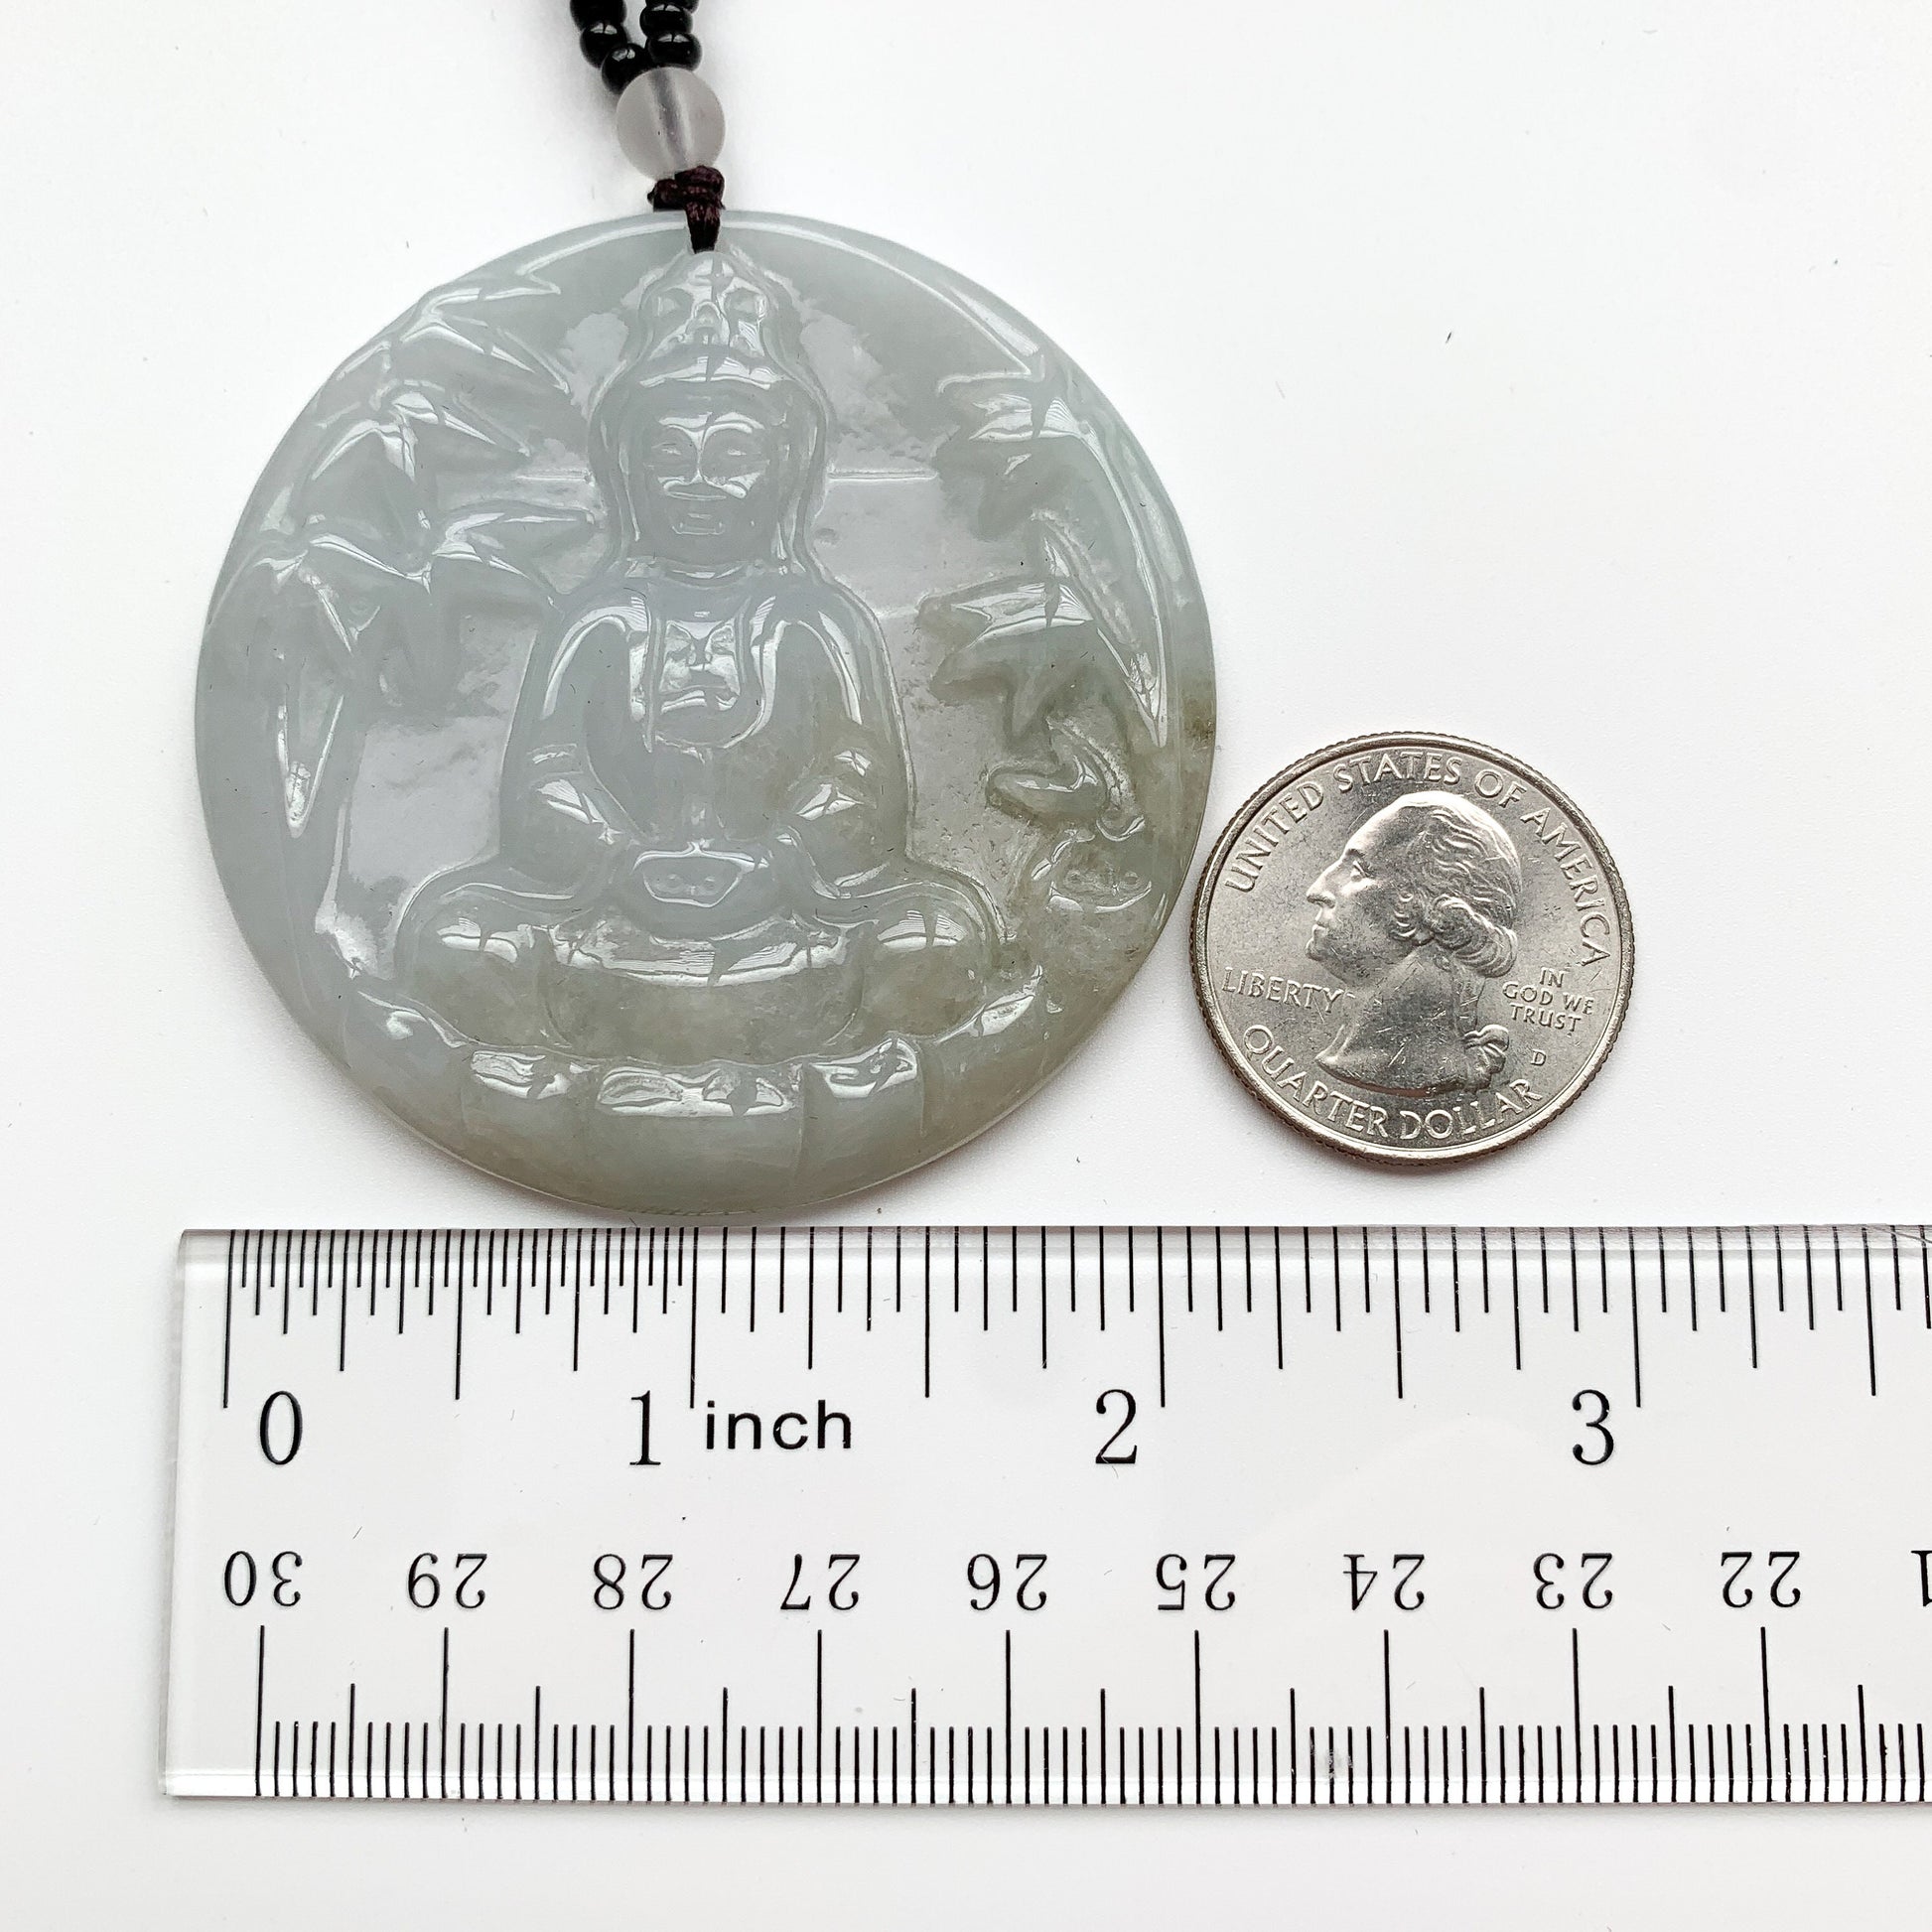 Large Jadeite Jade Guan Yin Avalokiteshvara Hand Carved Pendant Necklace, YJ-0321-0360492 - AriaDesignCollection